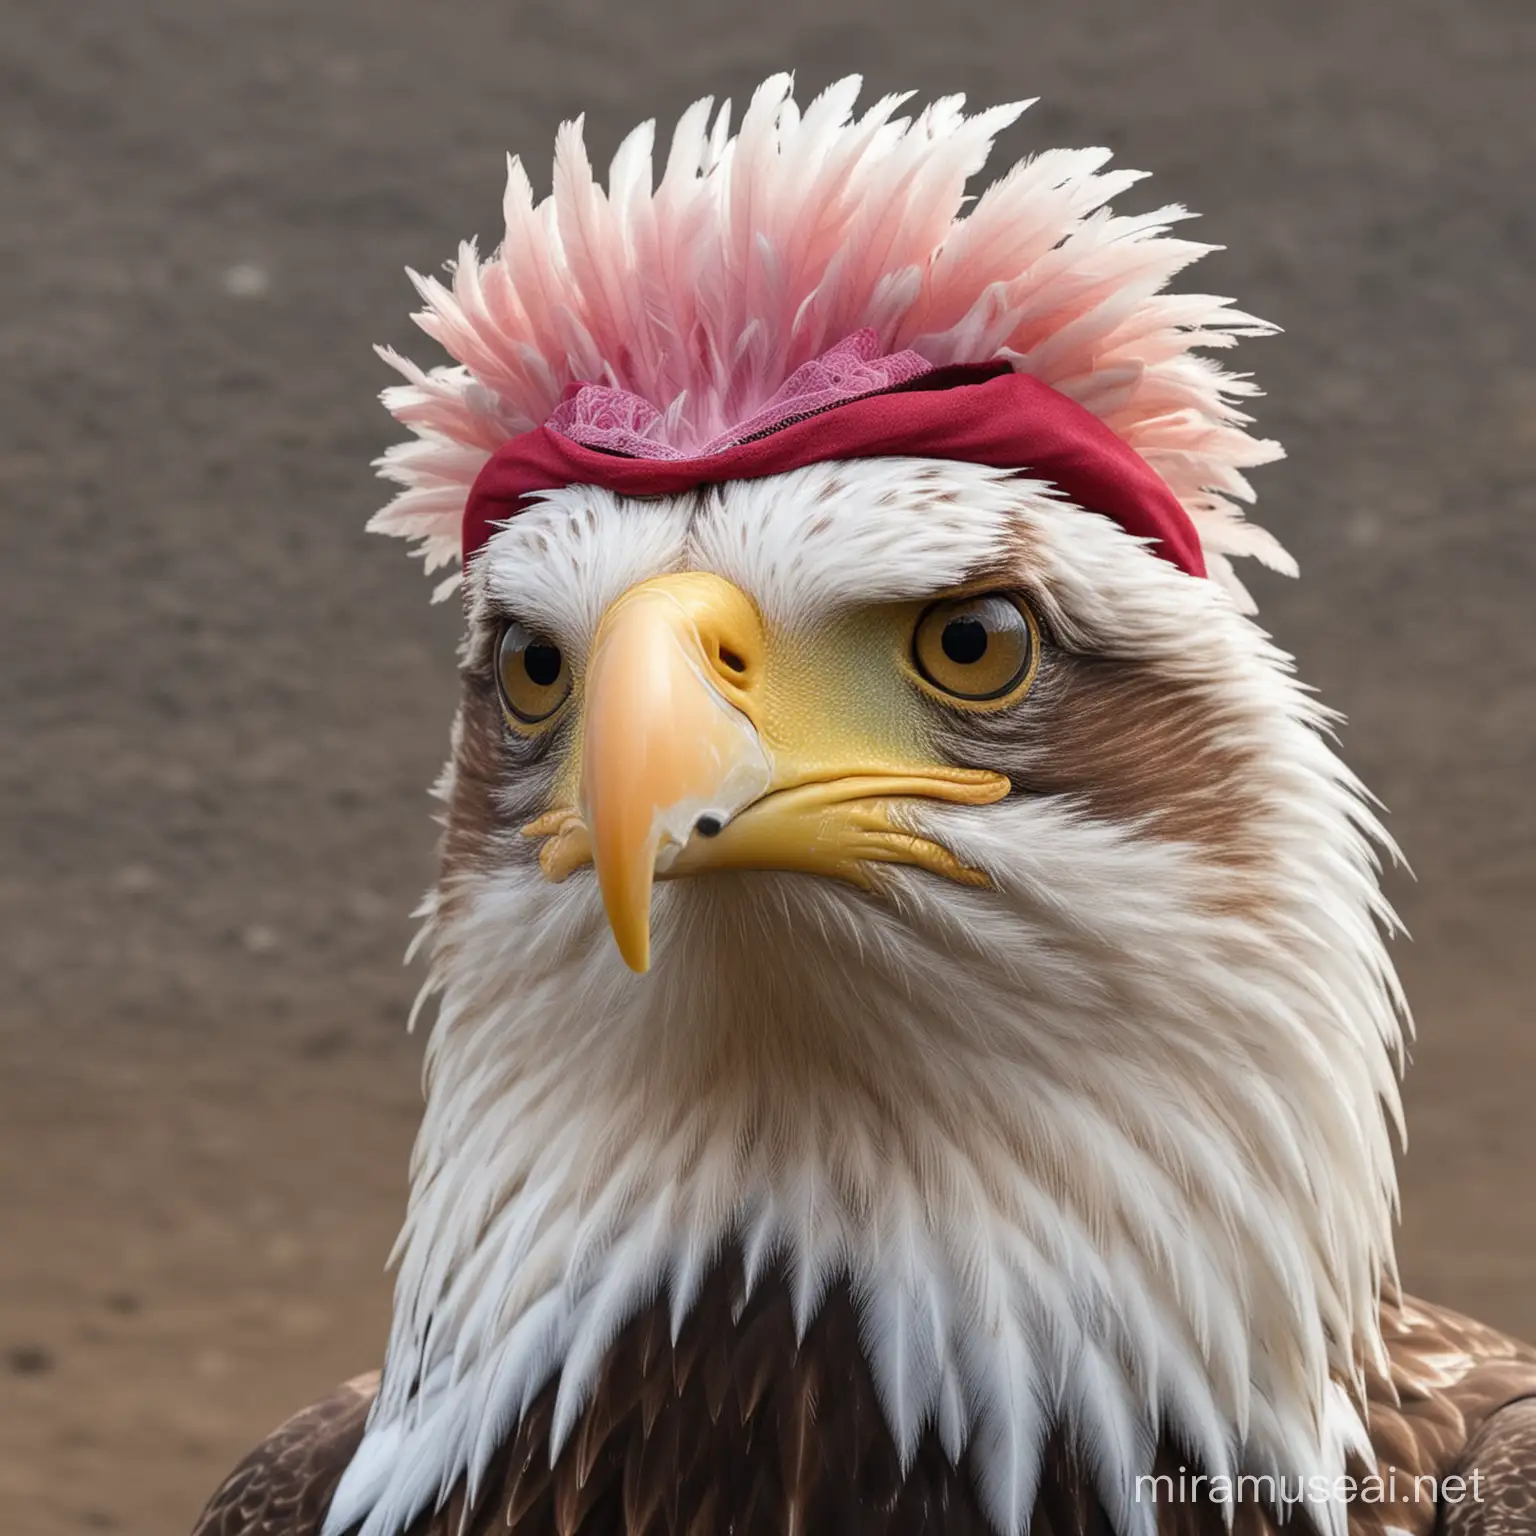 Majestic Eagle with Unique Head Feature